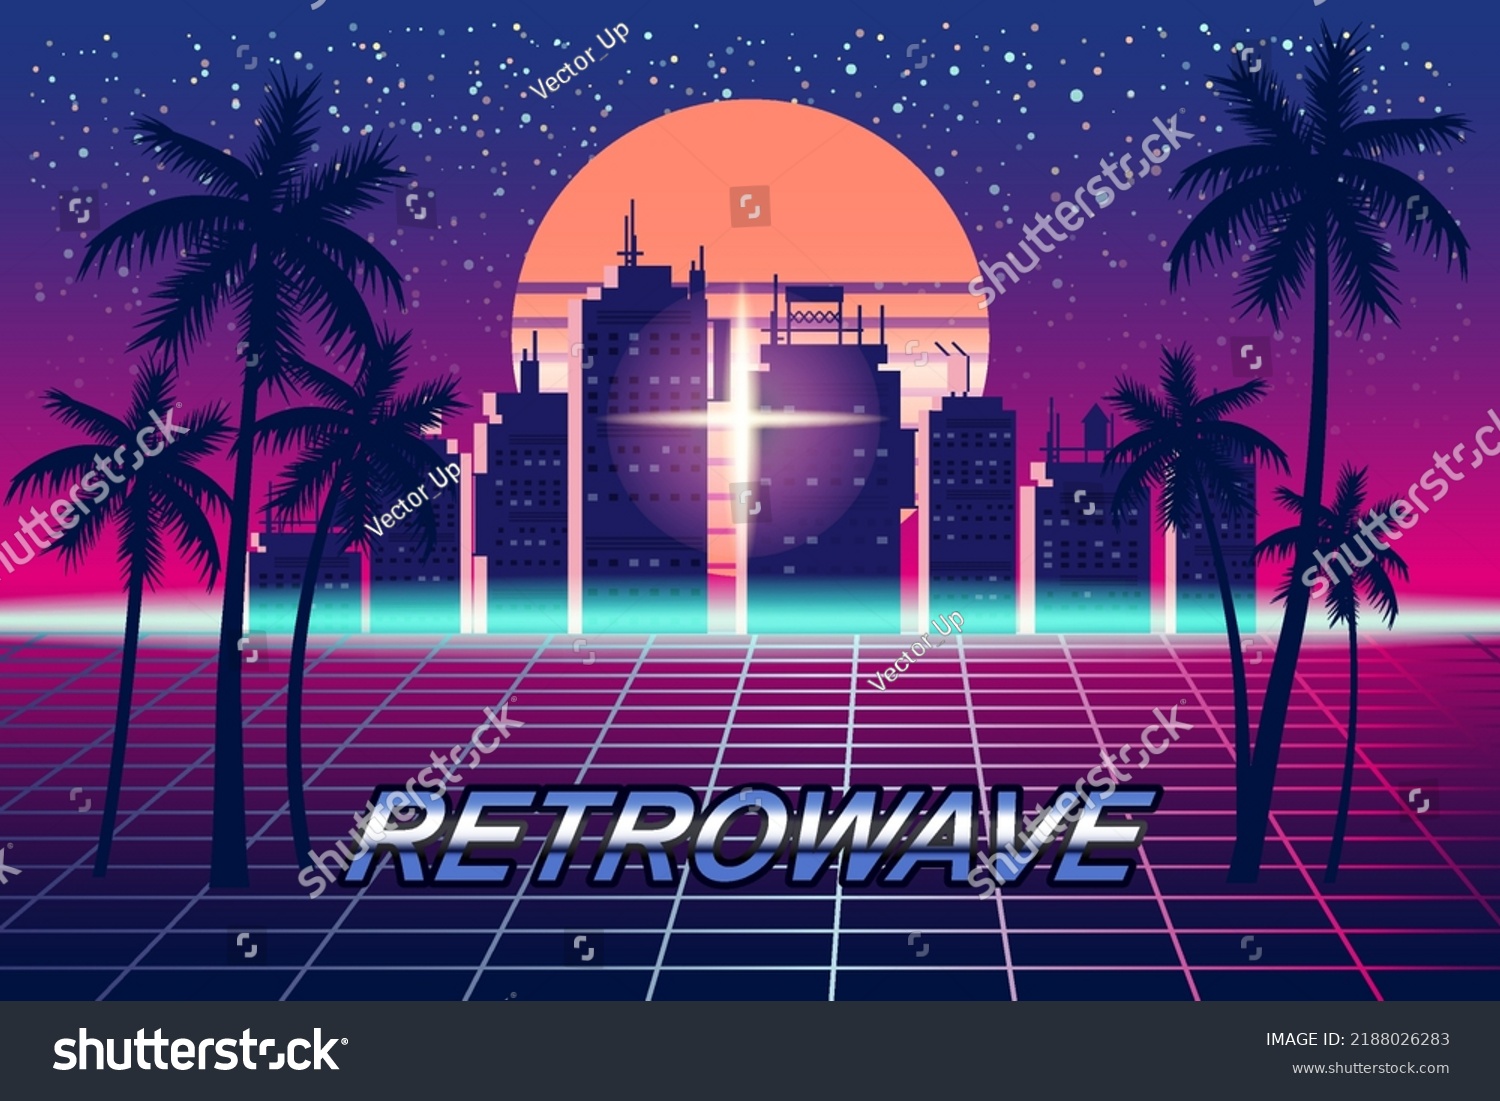 Retrowave Banner Vaporwave Aesthetic Background Futuristic Stock Vector ...